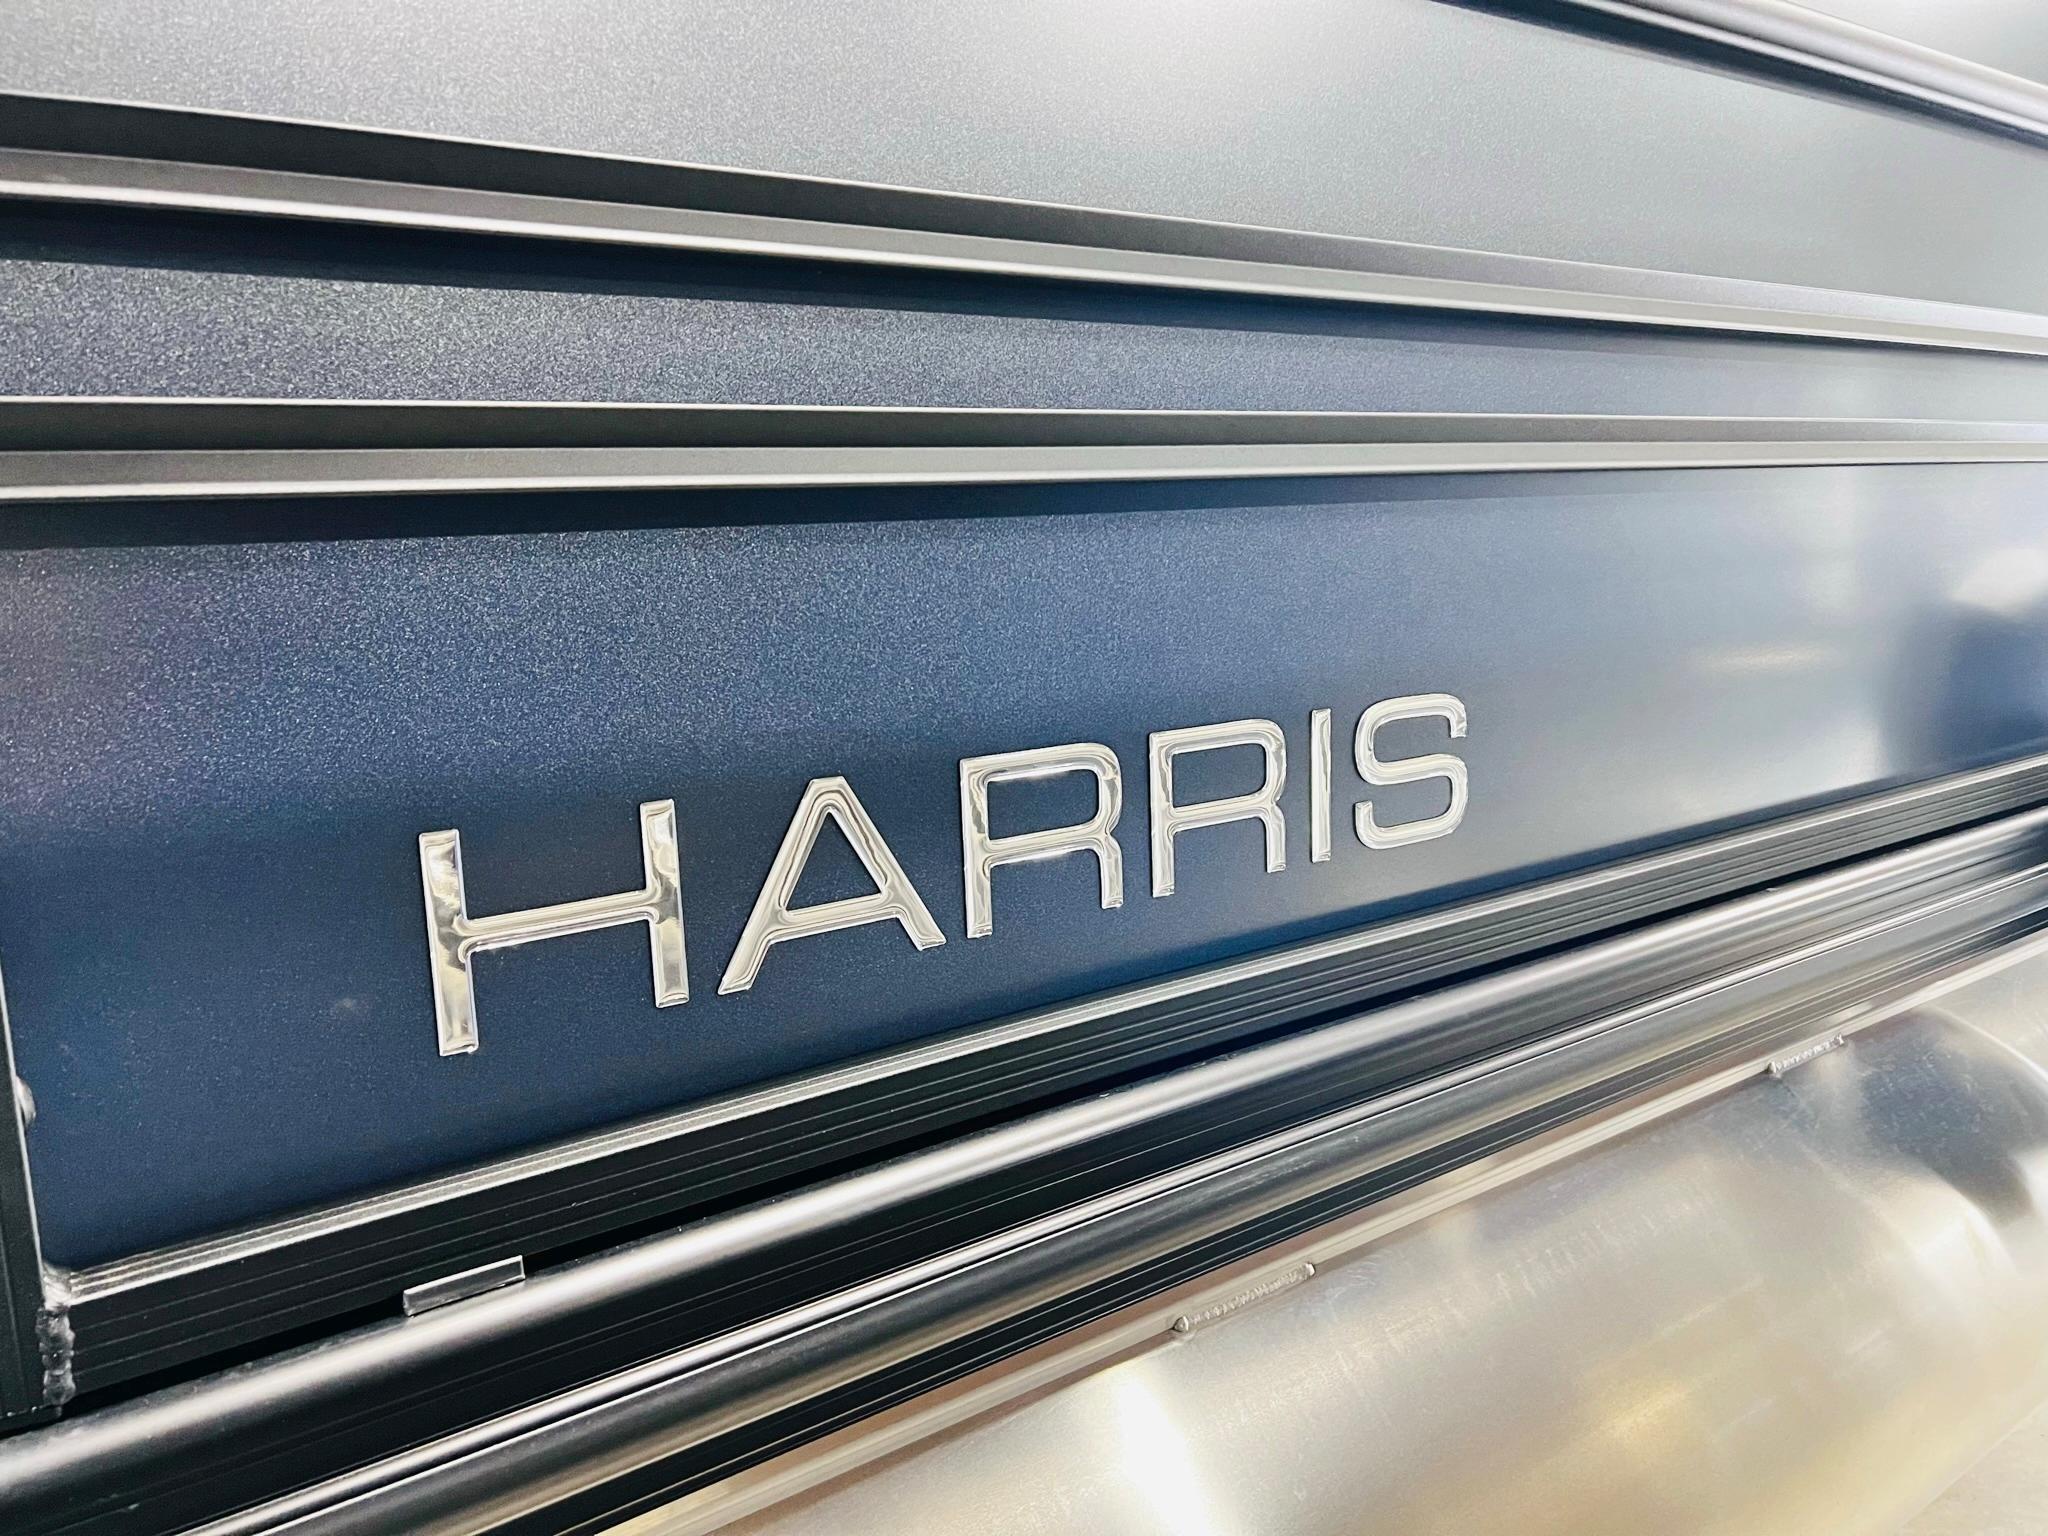 2023 Harris Sunliner 250